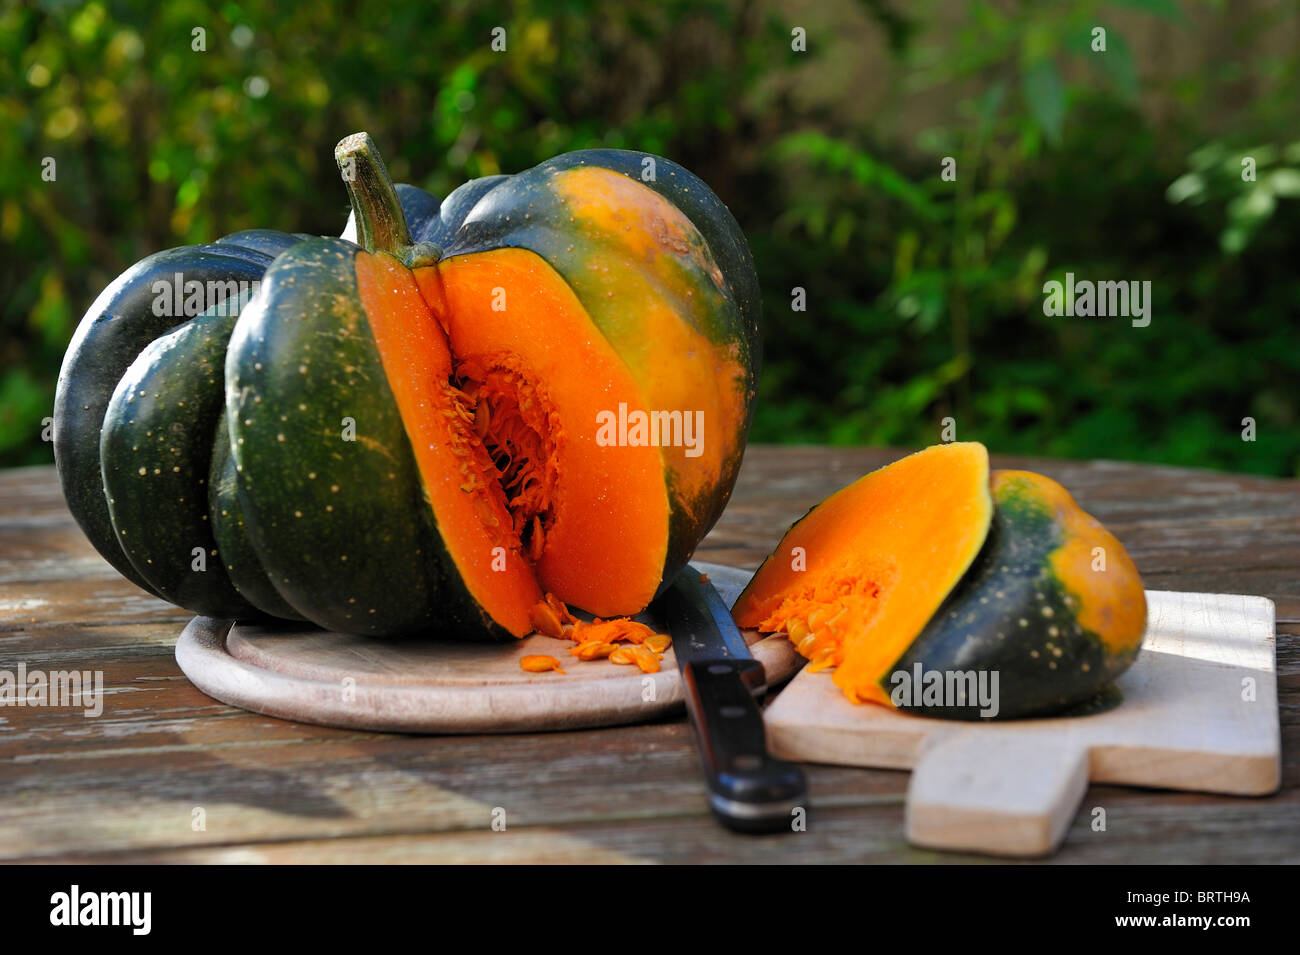 Moliugai hi-res stock photography and images - Alamy